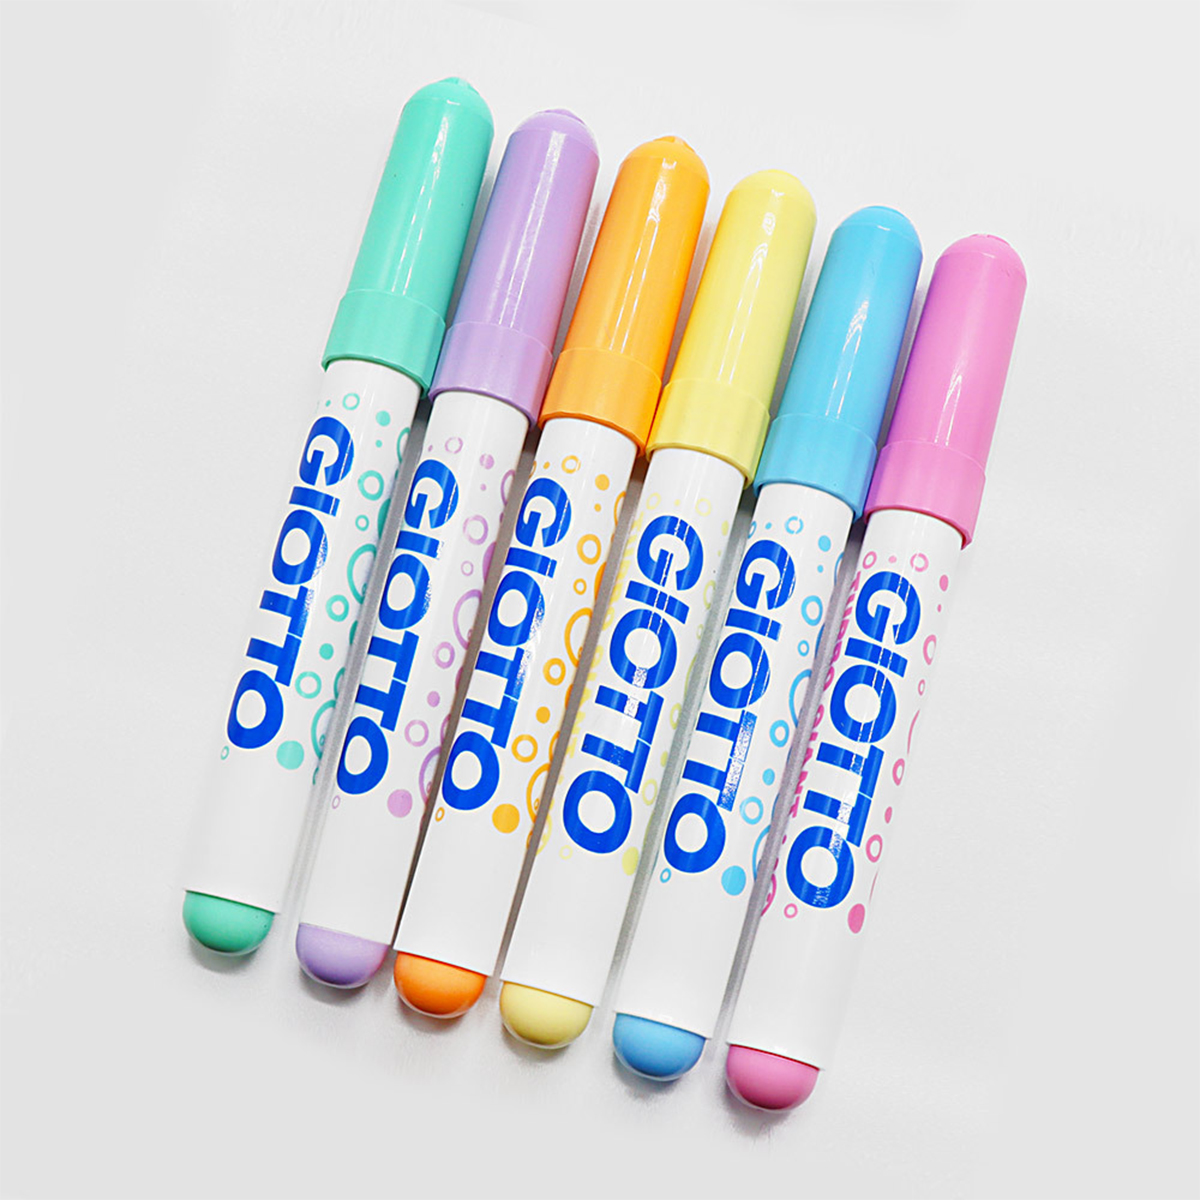 Turbo Giant Pastel Set of 6 in the group Kids / Kids' Pens / Felt Tip Pens for Kids at Pen Store (129851)